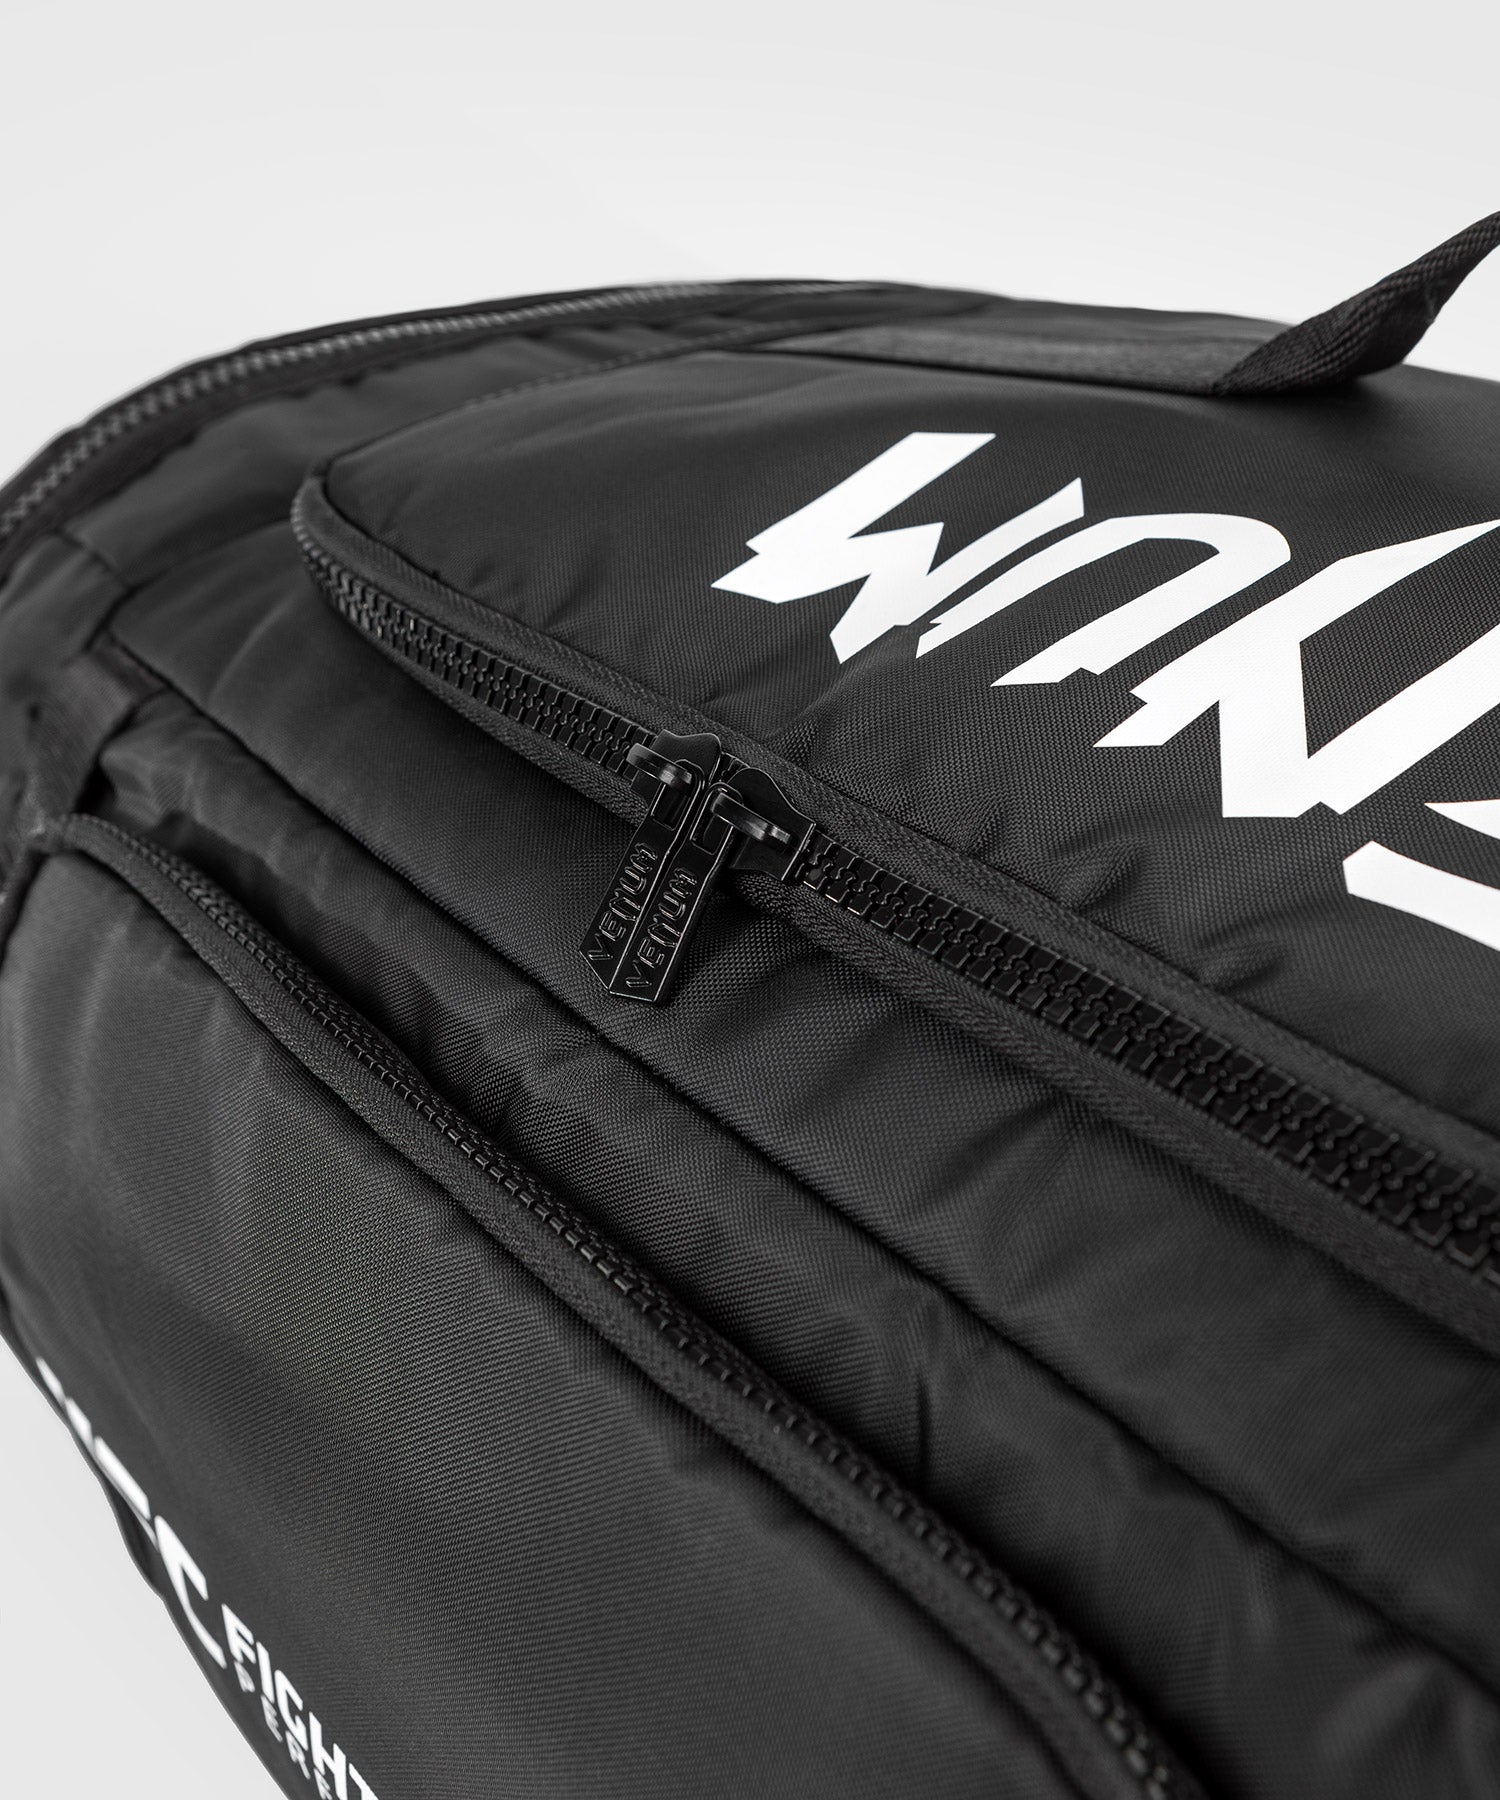 EVO Sports Kit Bag Backpack Holdall Duffle Travel Shoulder Gym Gear Fitness  UFC